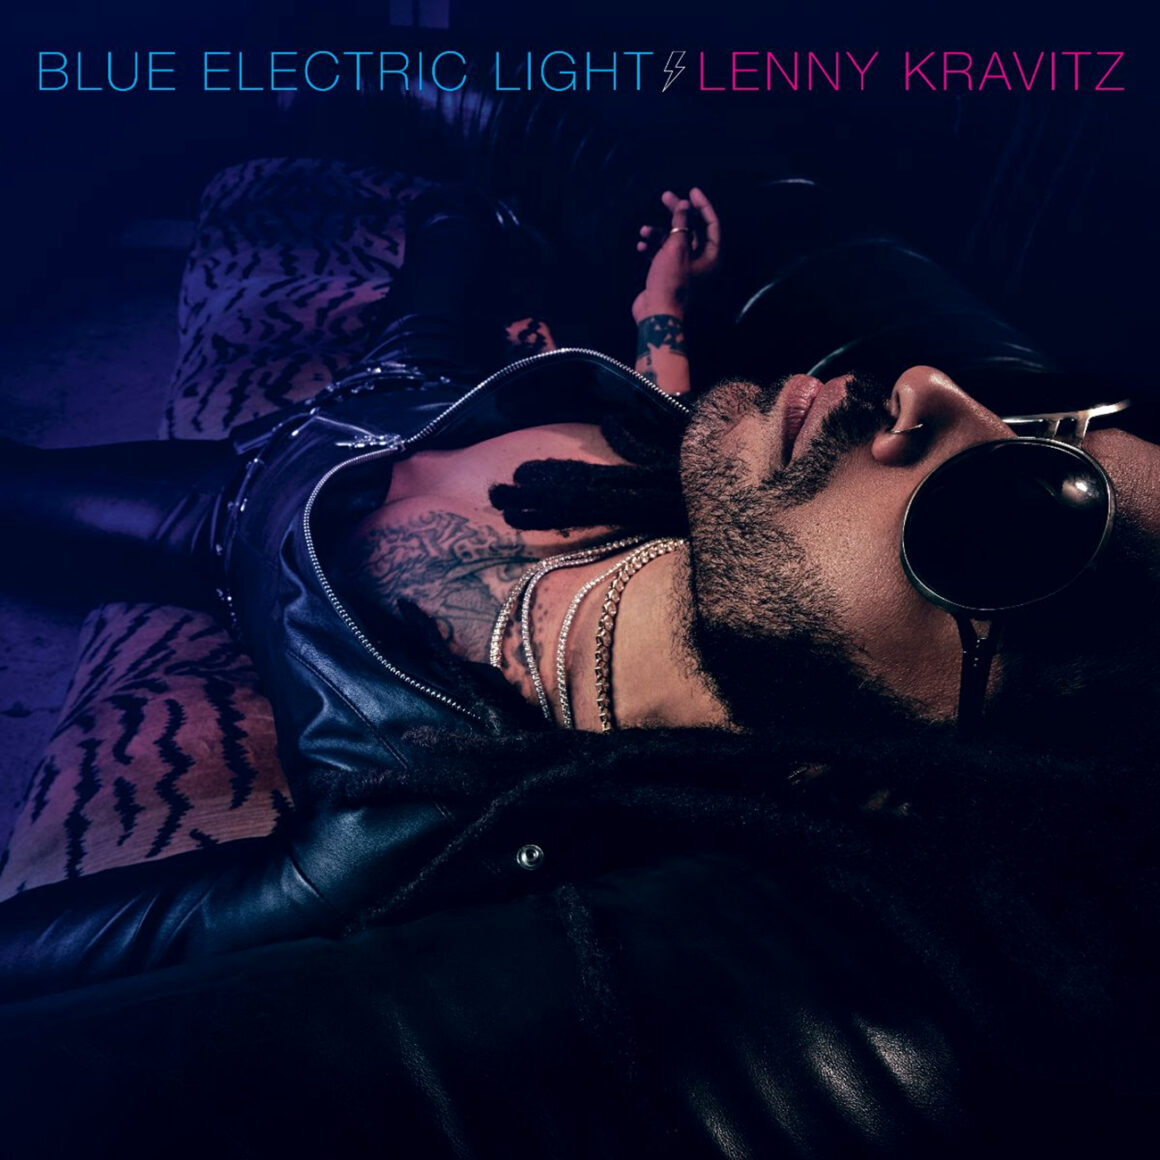 Lenny Kravitz, Blue Electric Light album artwork, @lennykravitz